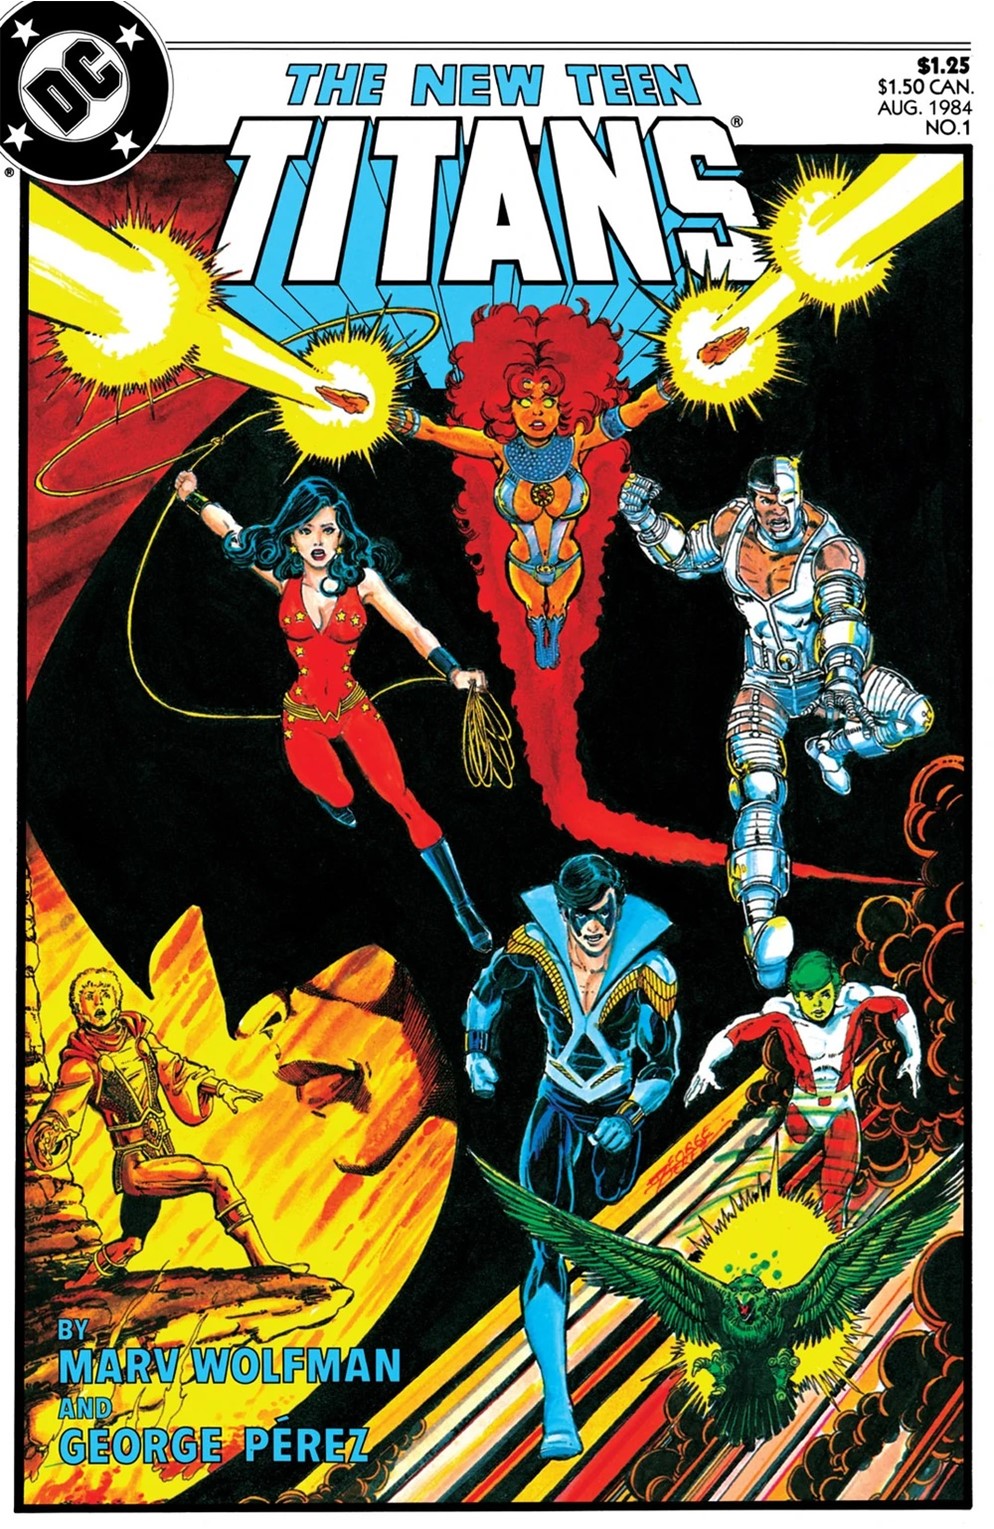 New Teen Titans (Volume 2) #1 August, 1984.